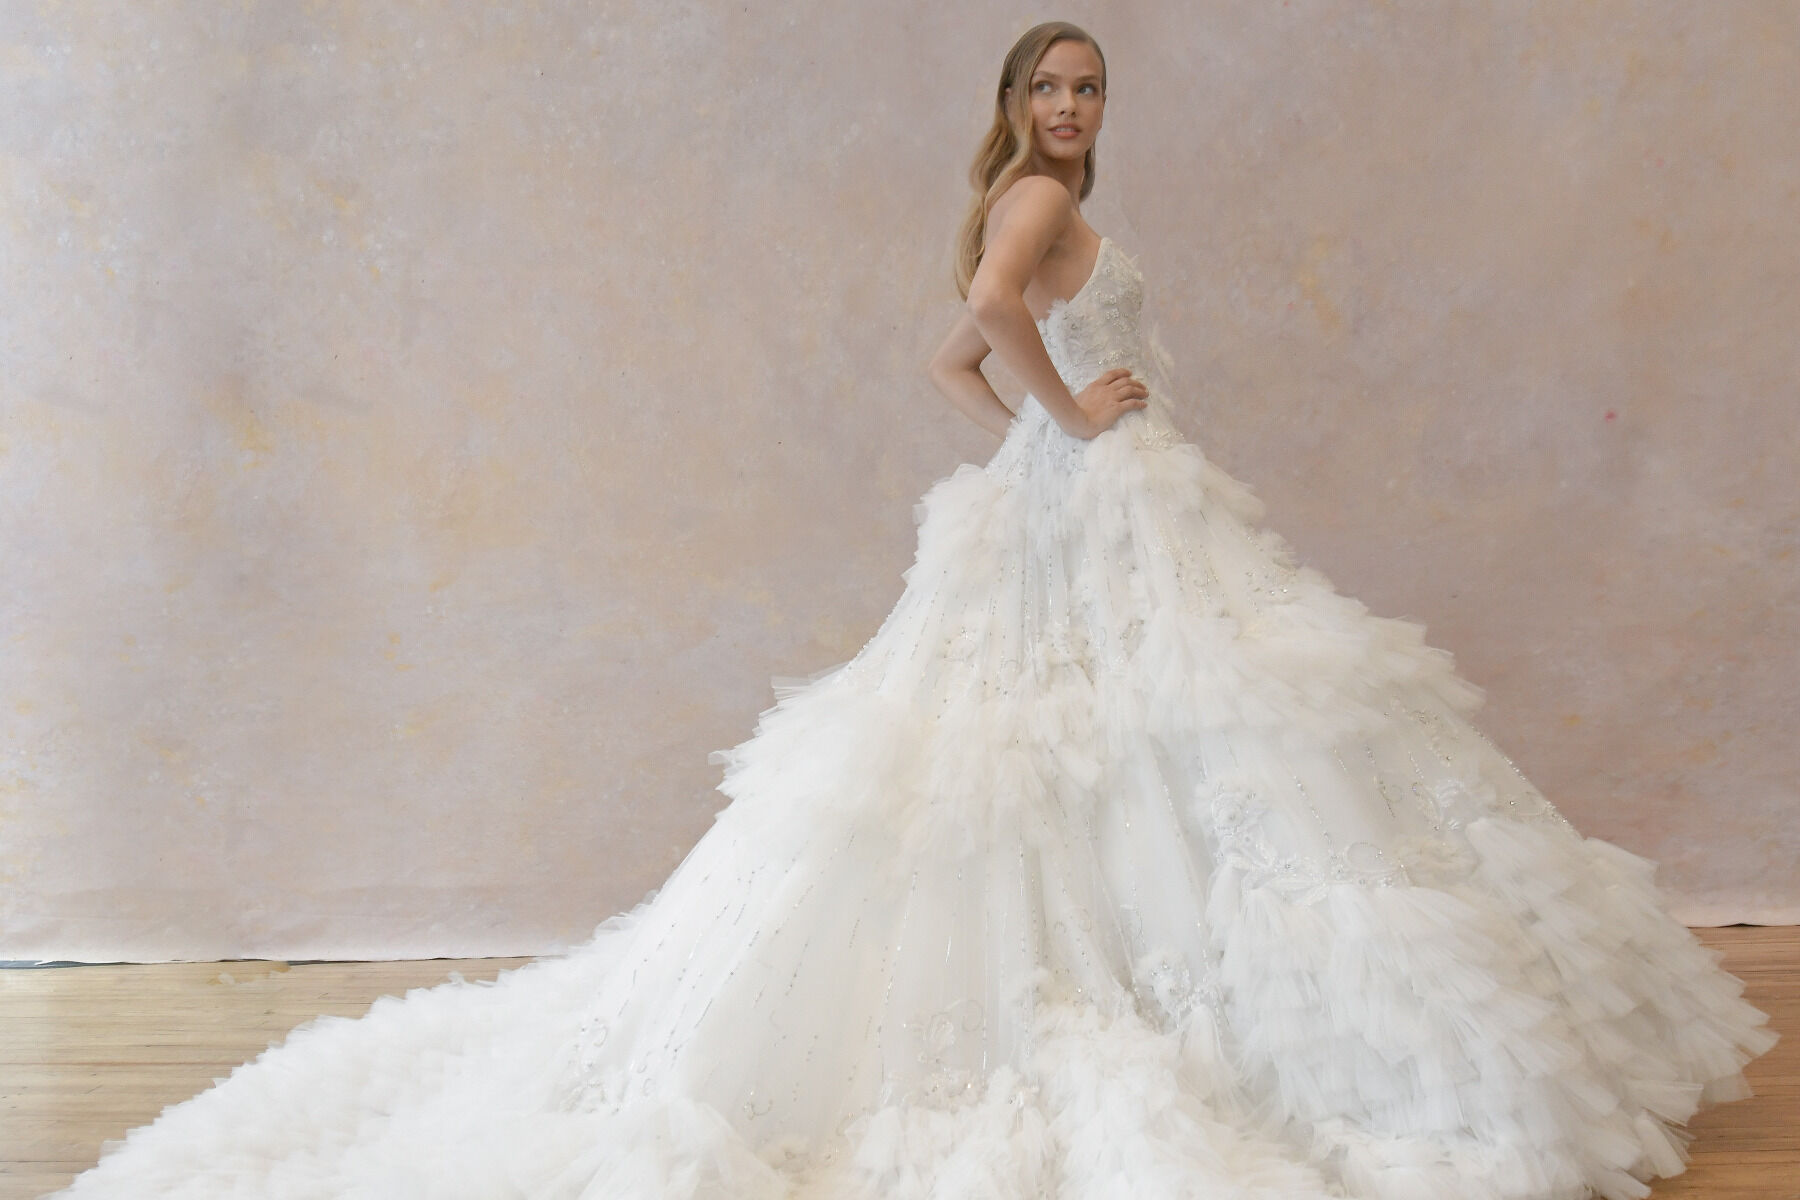 2023 Wedding dress trends: a bridal ballgown by Ines Di Santo